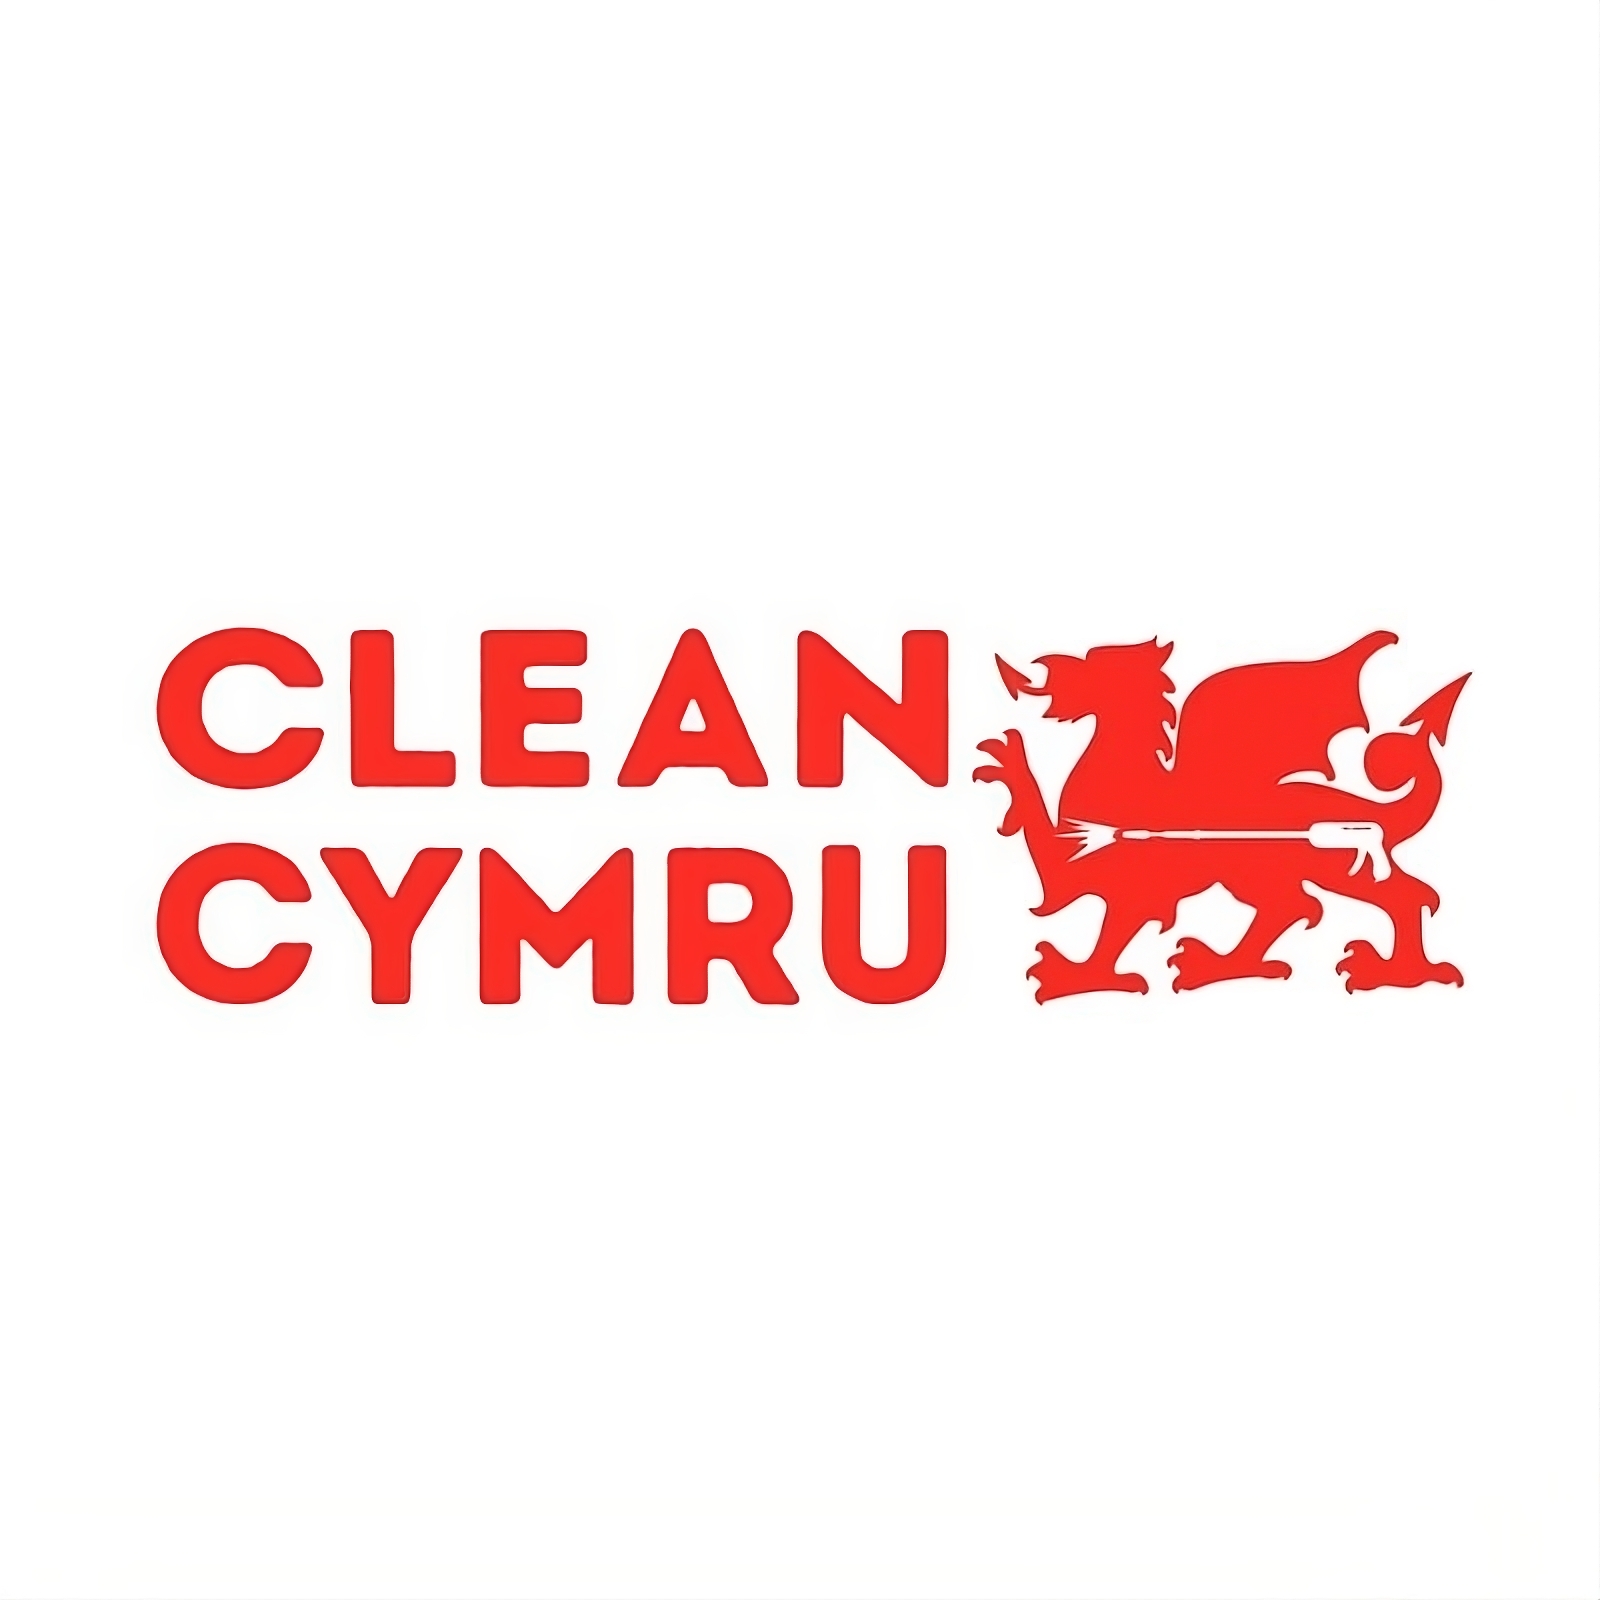 Clean Cymru